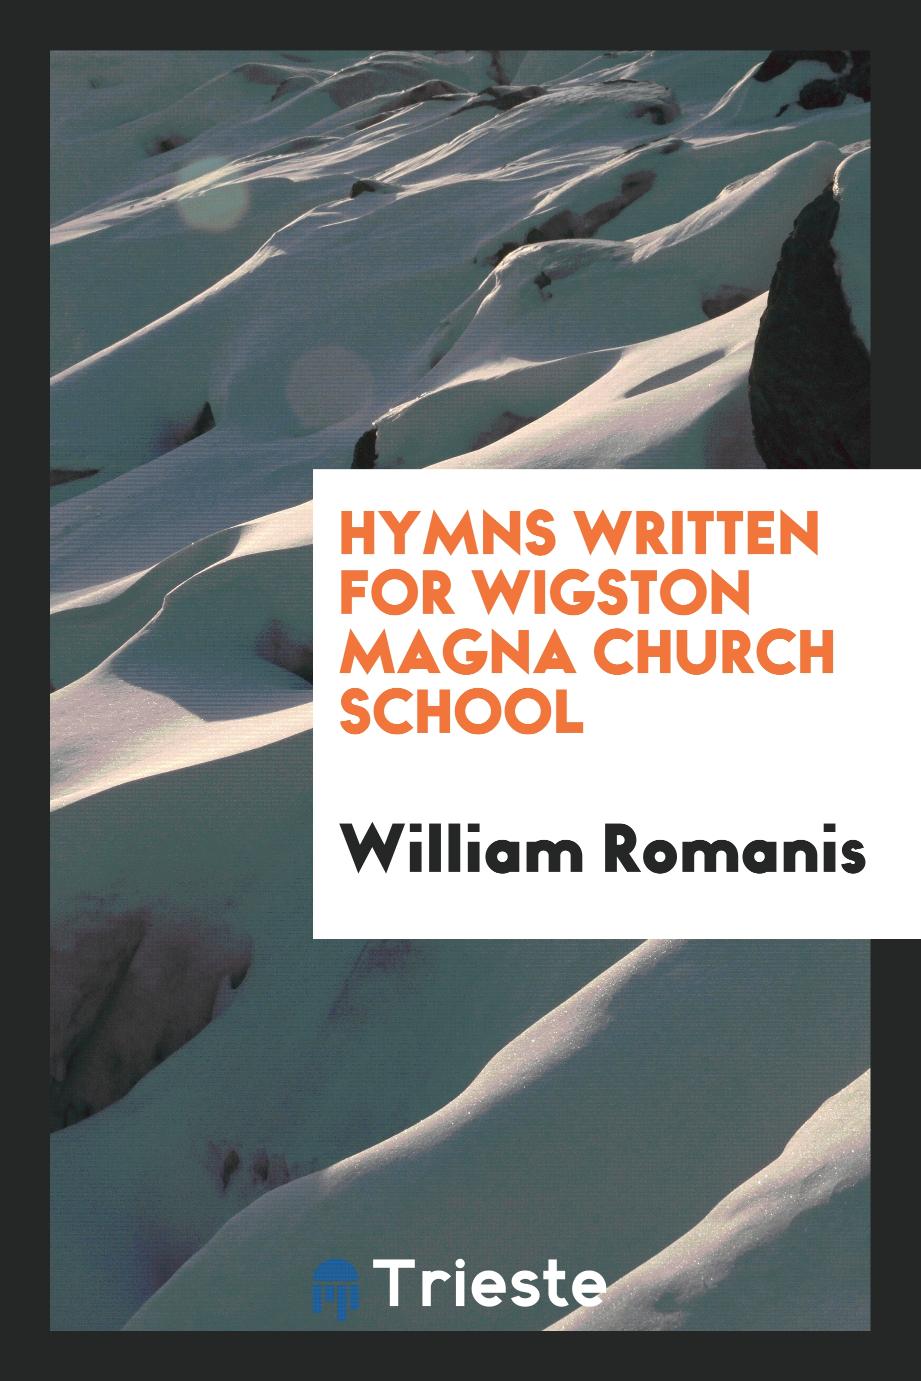 Hymns written for Wigston Magna church school